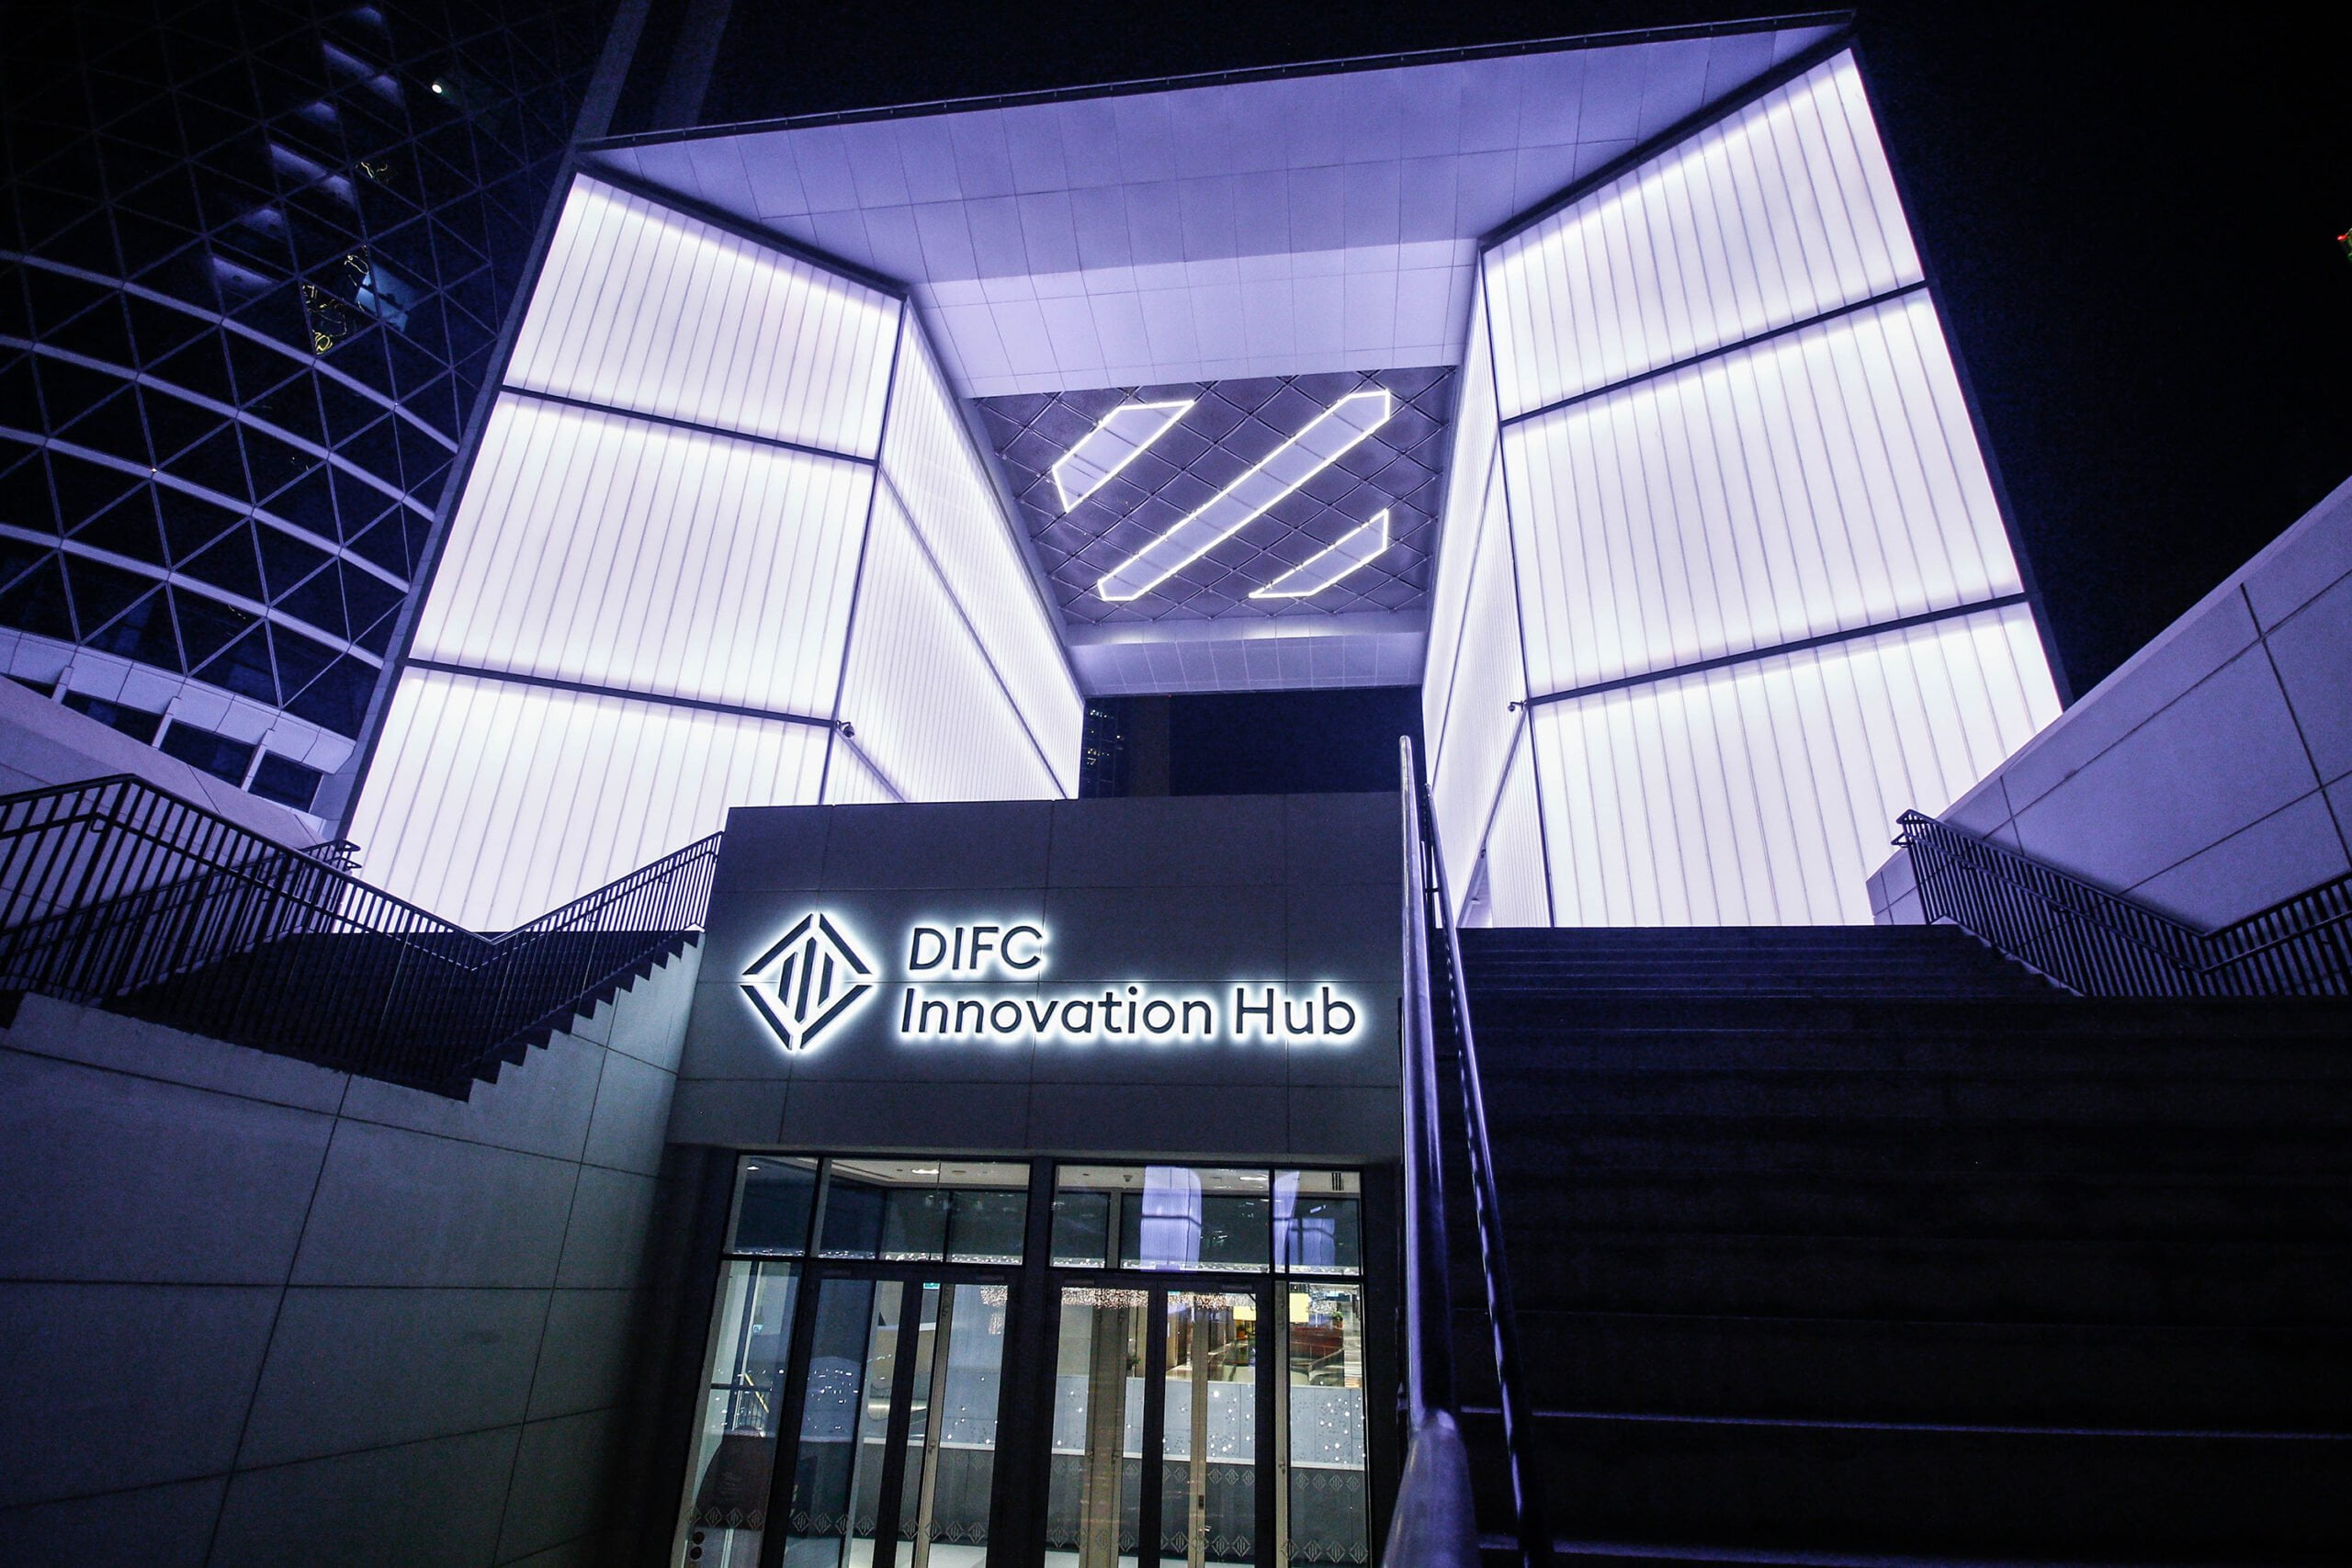 Johnson Technical Services Architecture DIFC Gate Avenue Dubai